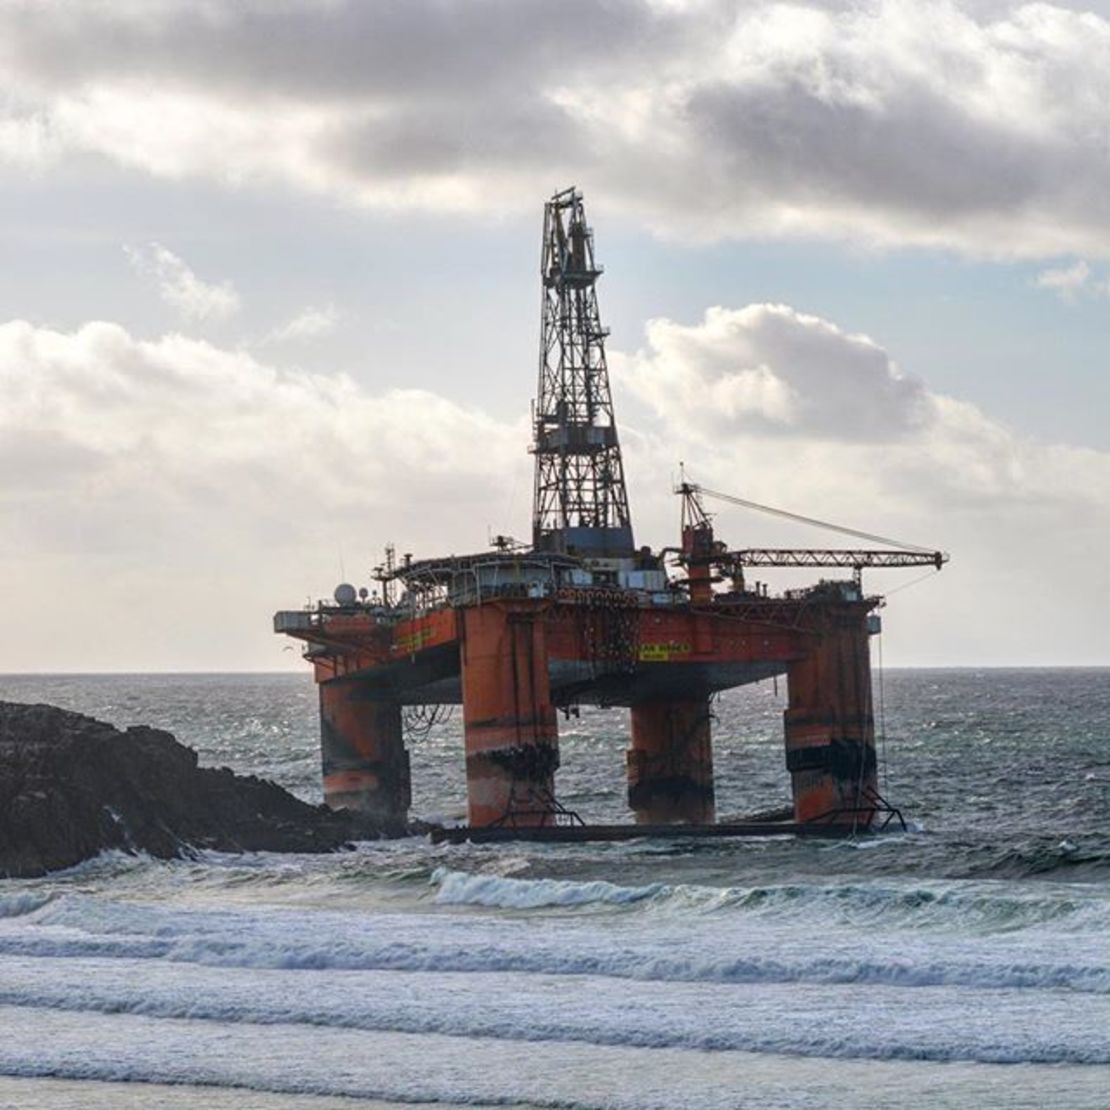 Scottish oil rig runs aground 3